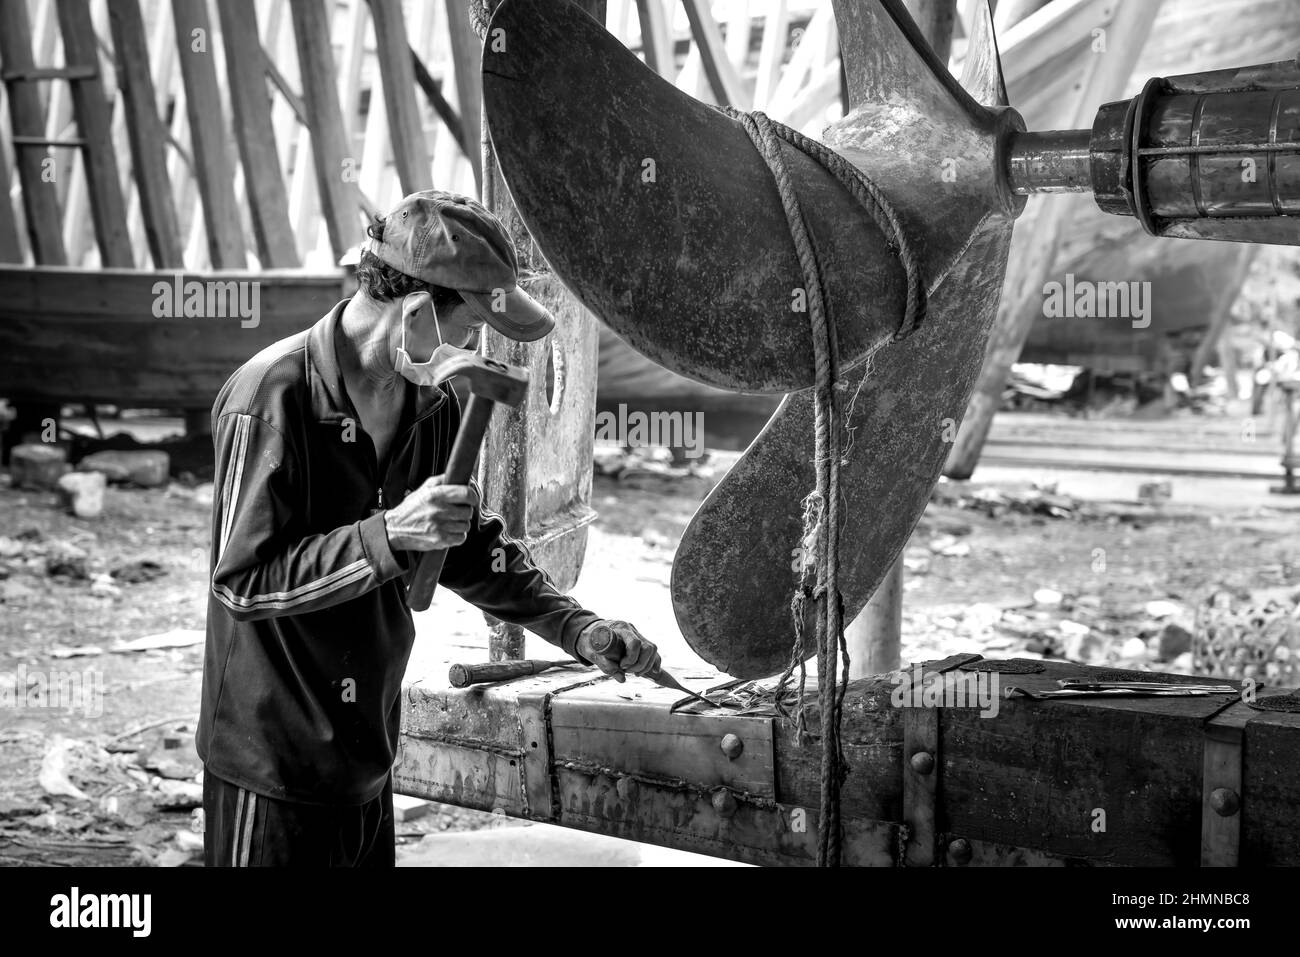 Tam Quan Shipyard, Binh Dinh Province, Vietnam - January 1, 2022: Workers are repairing ships at Tam Quan Shipyard, Binh Dinh, Vietnam Stock Photo